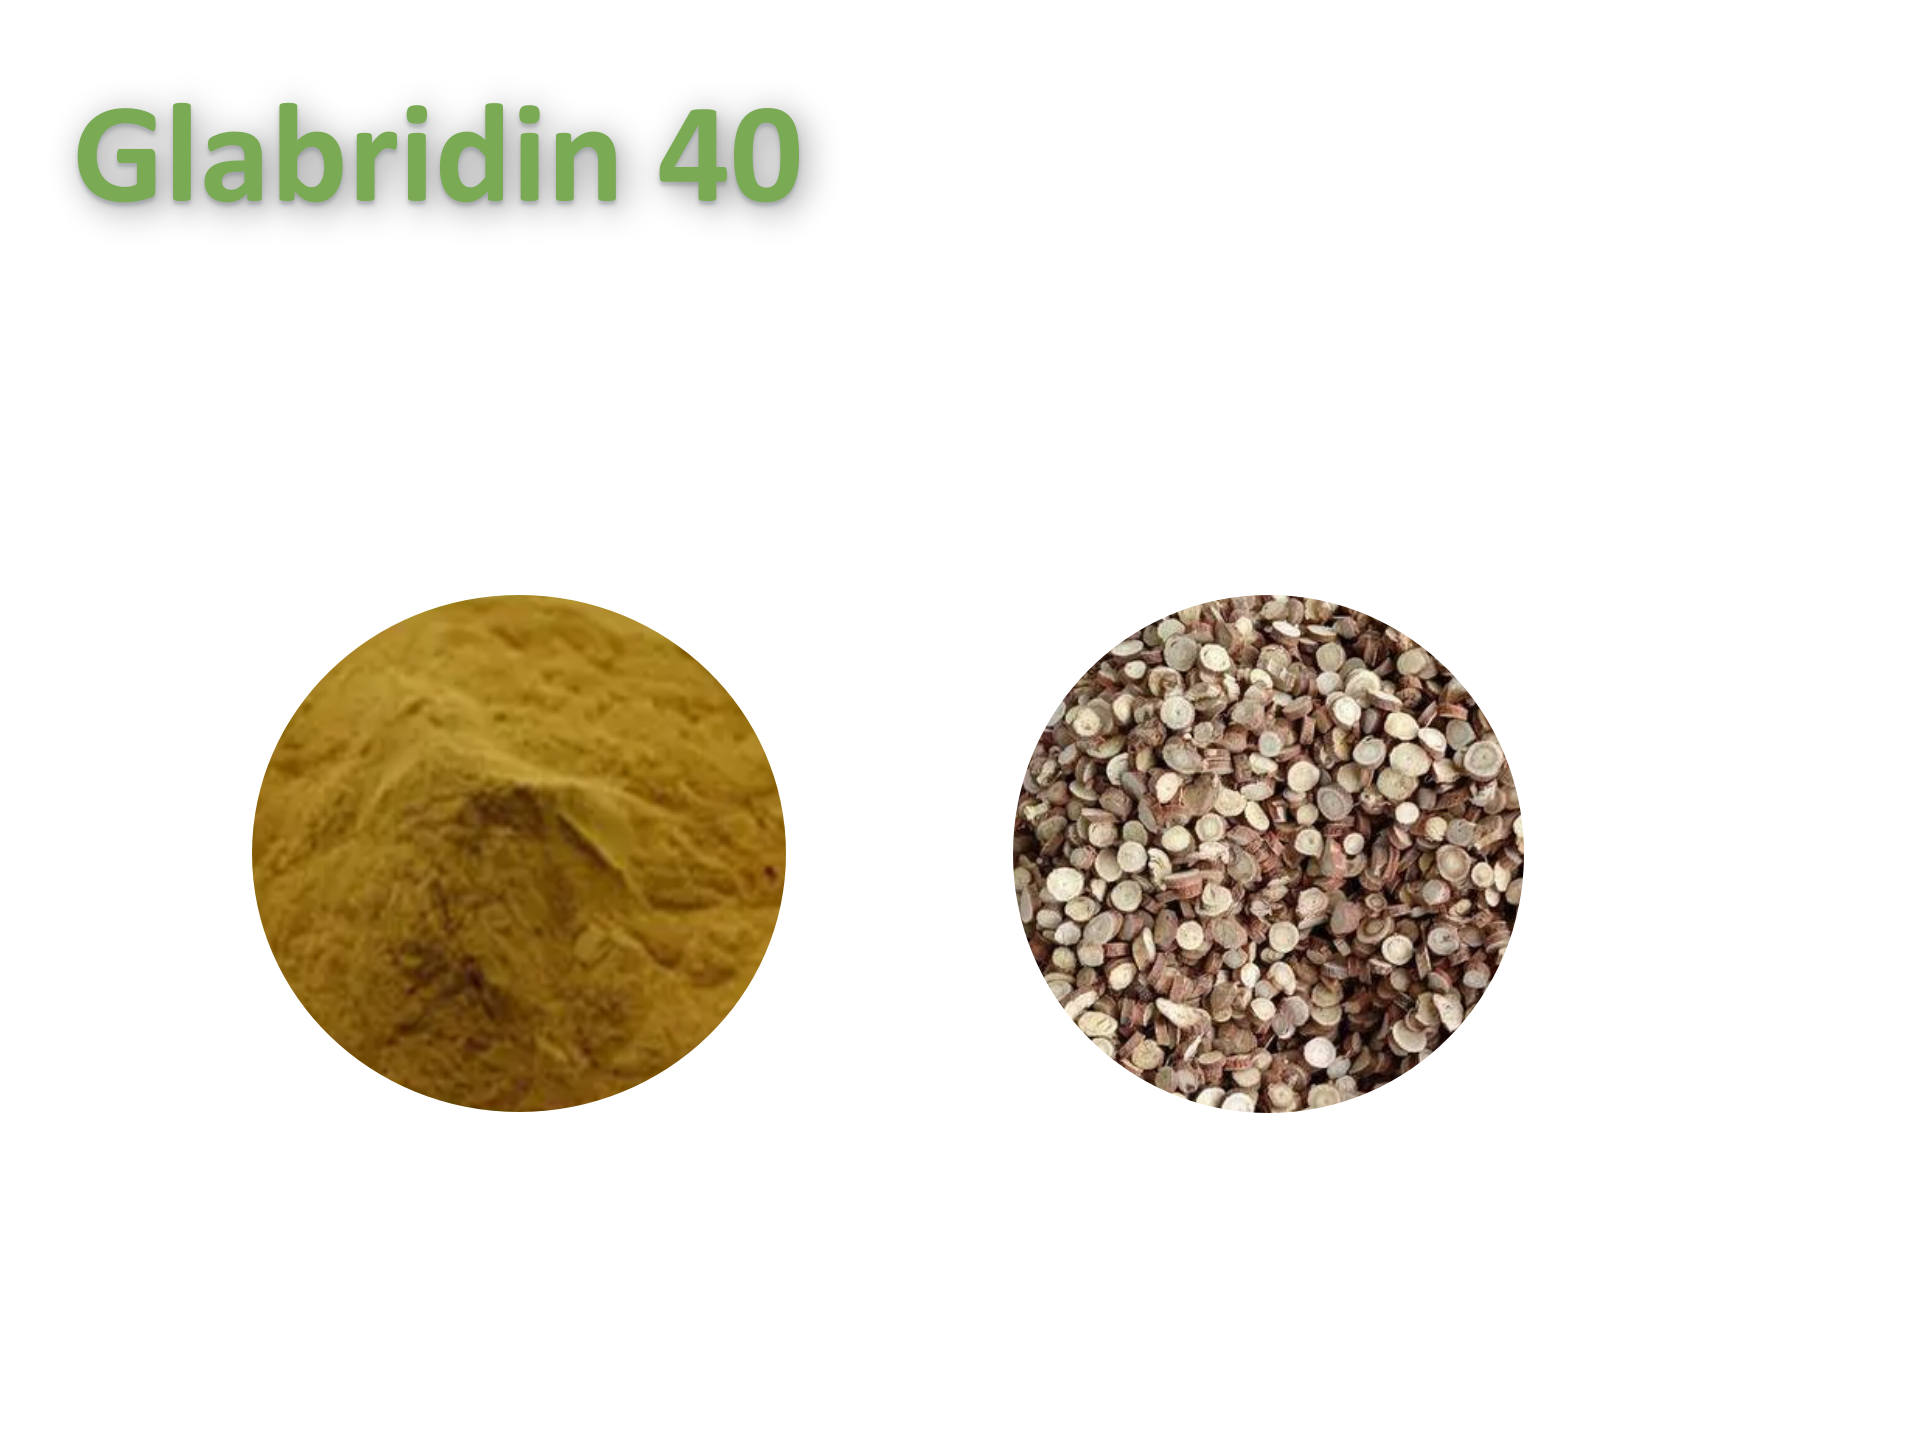 Glabridine 40